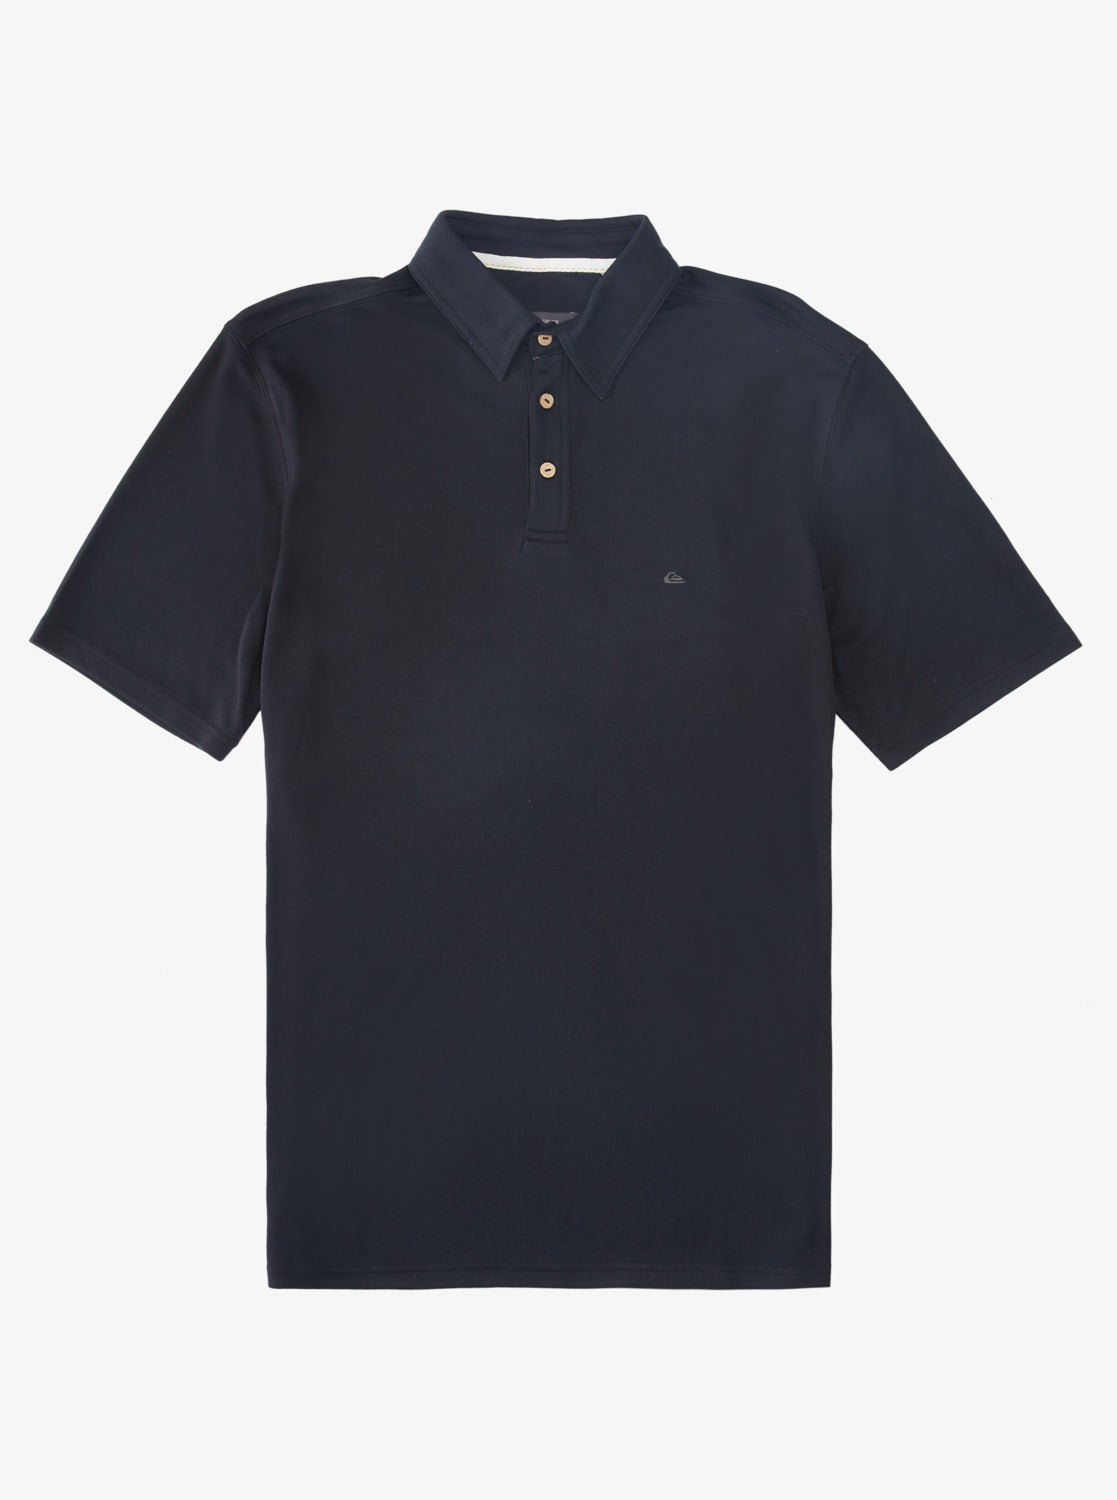 Waterman Waterpolo Short Sleeve Polo Shirt - Black